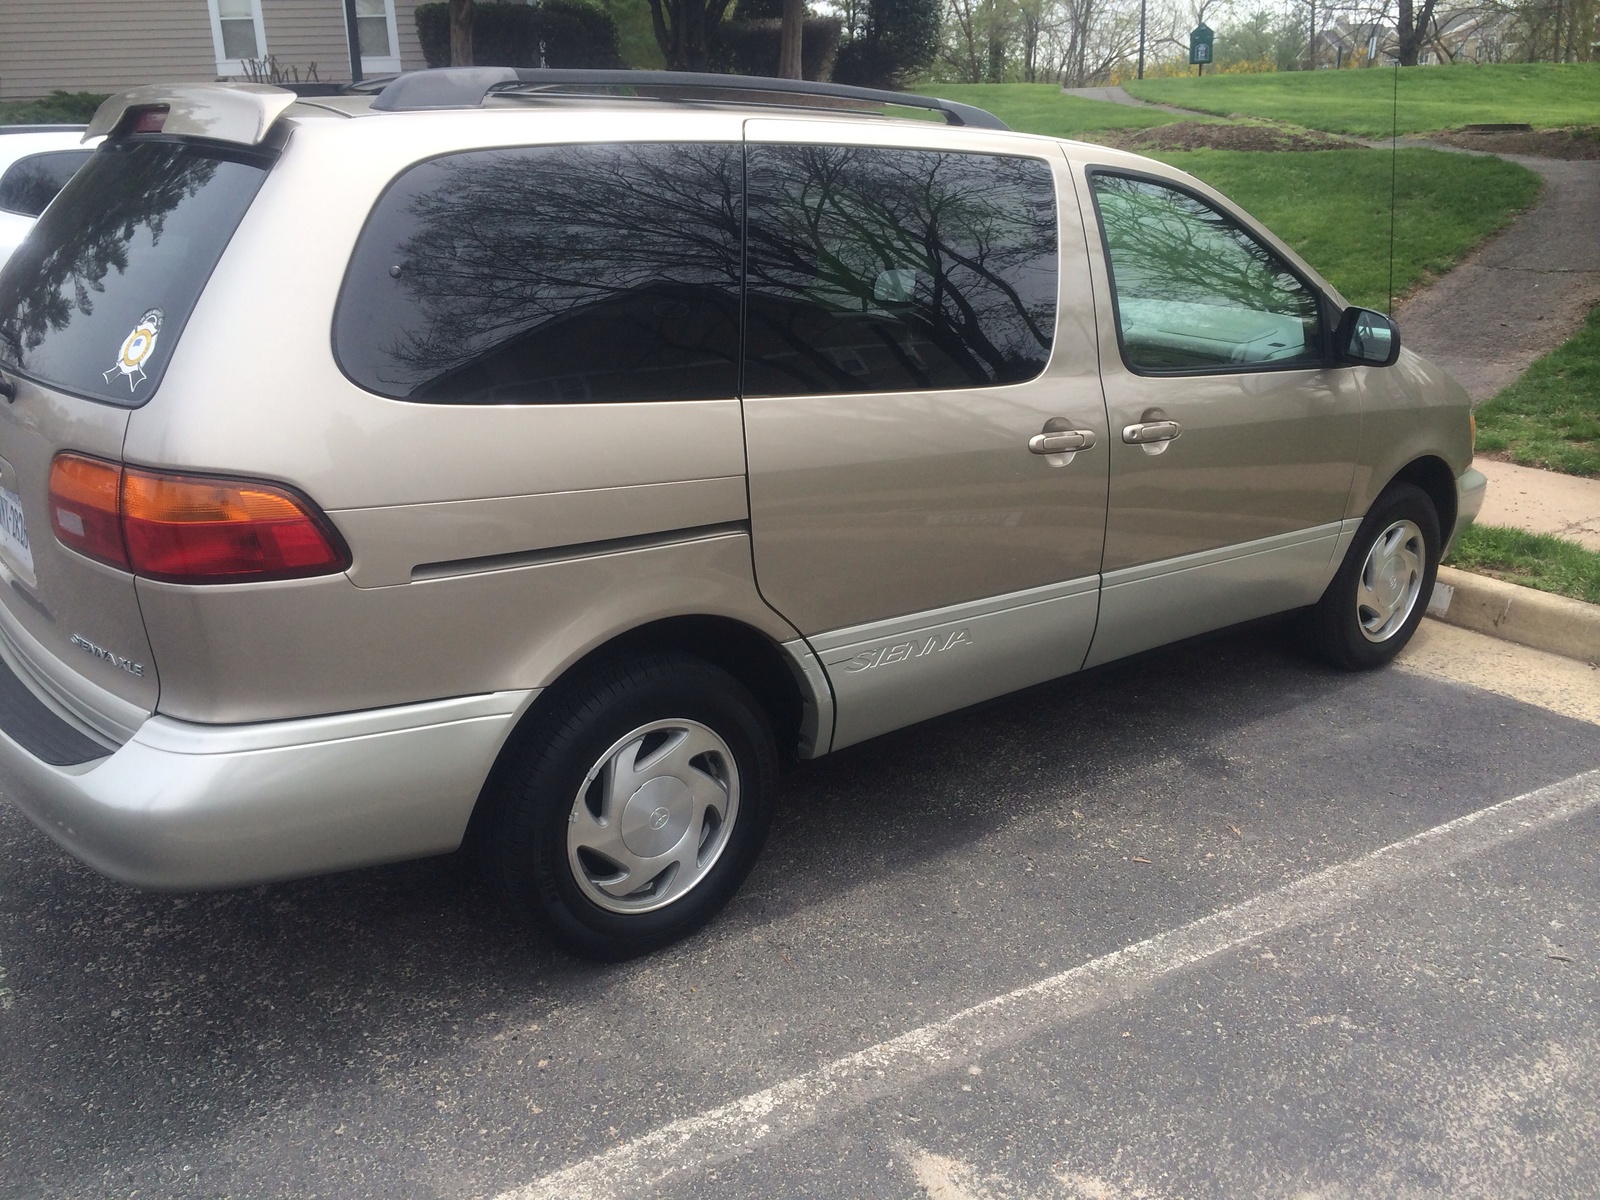 2000 toyota sienna minivan review #4